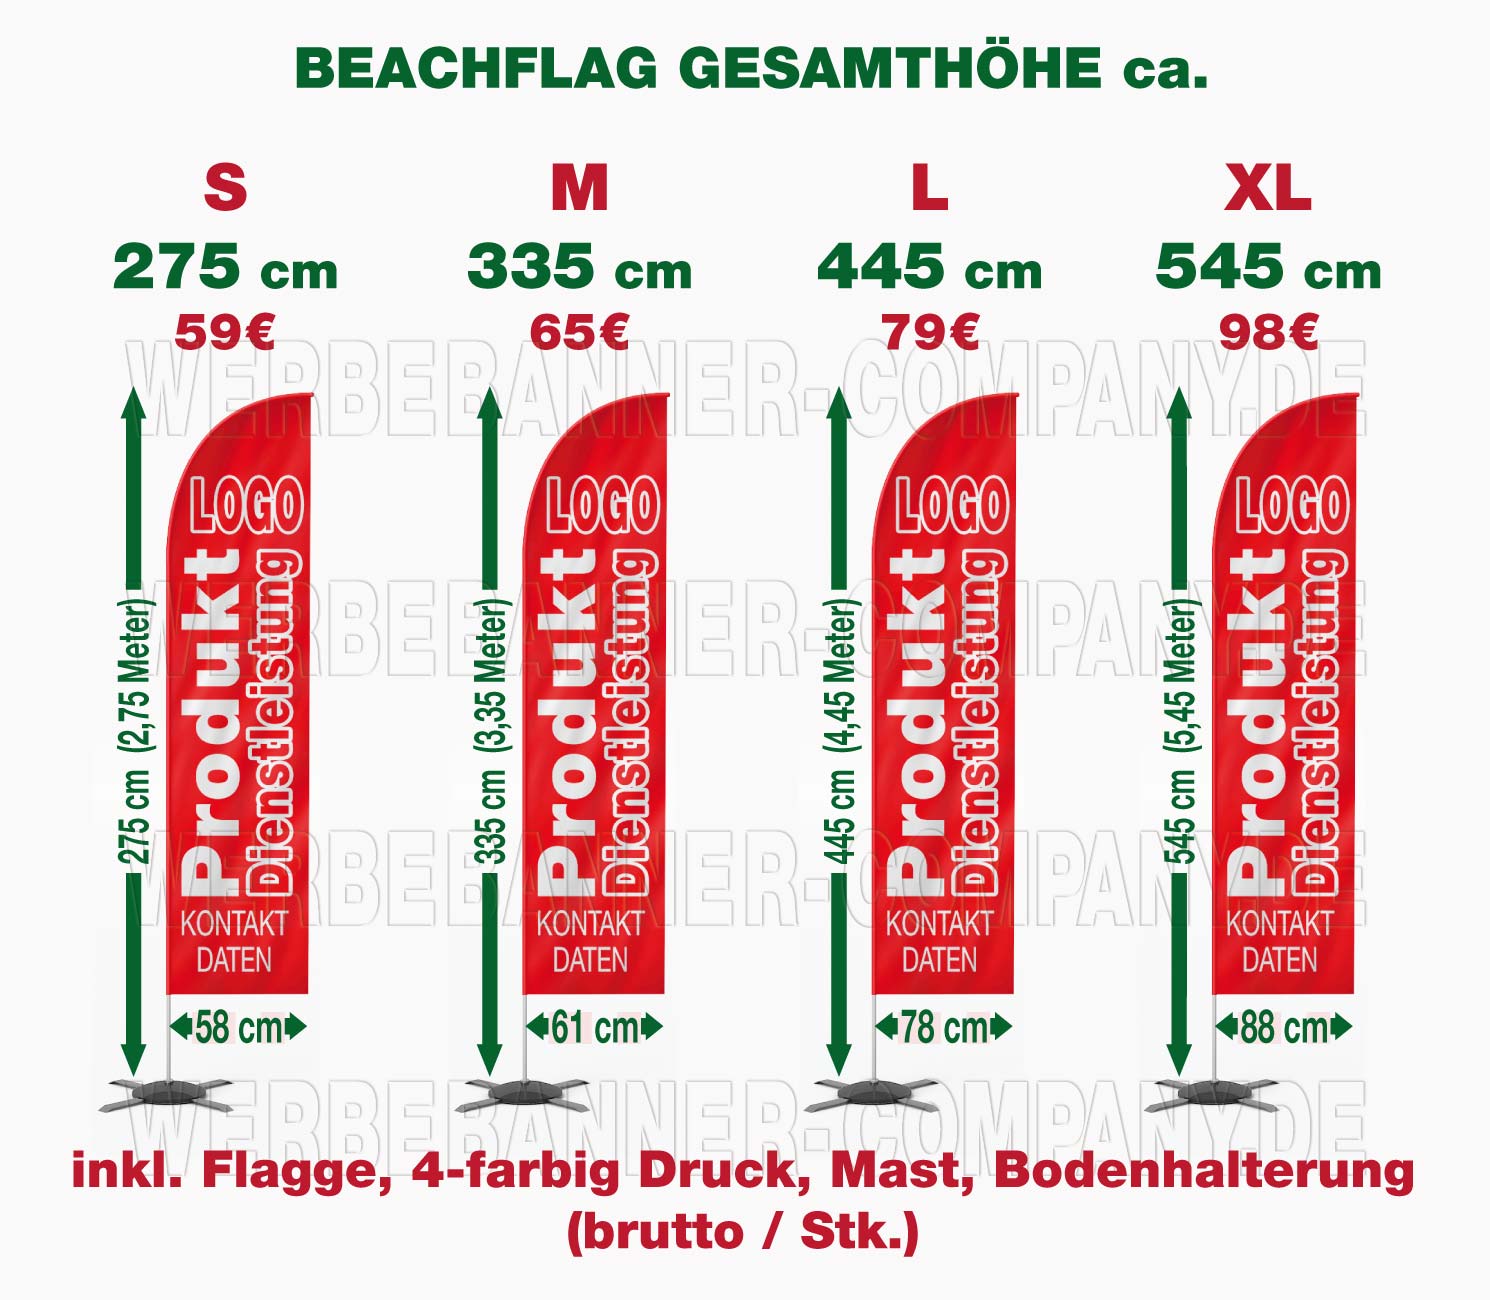 Beachflag / Snowflag, inkl. Flagge, 4-farbig Druck, Mast, Bodenhalterung, komplett nur 59€ (brutto/Stk.)